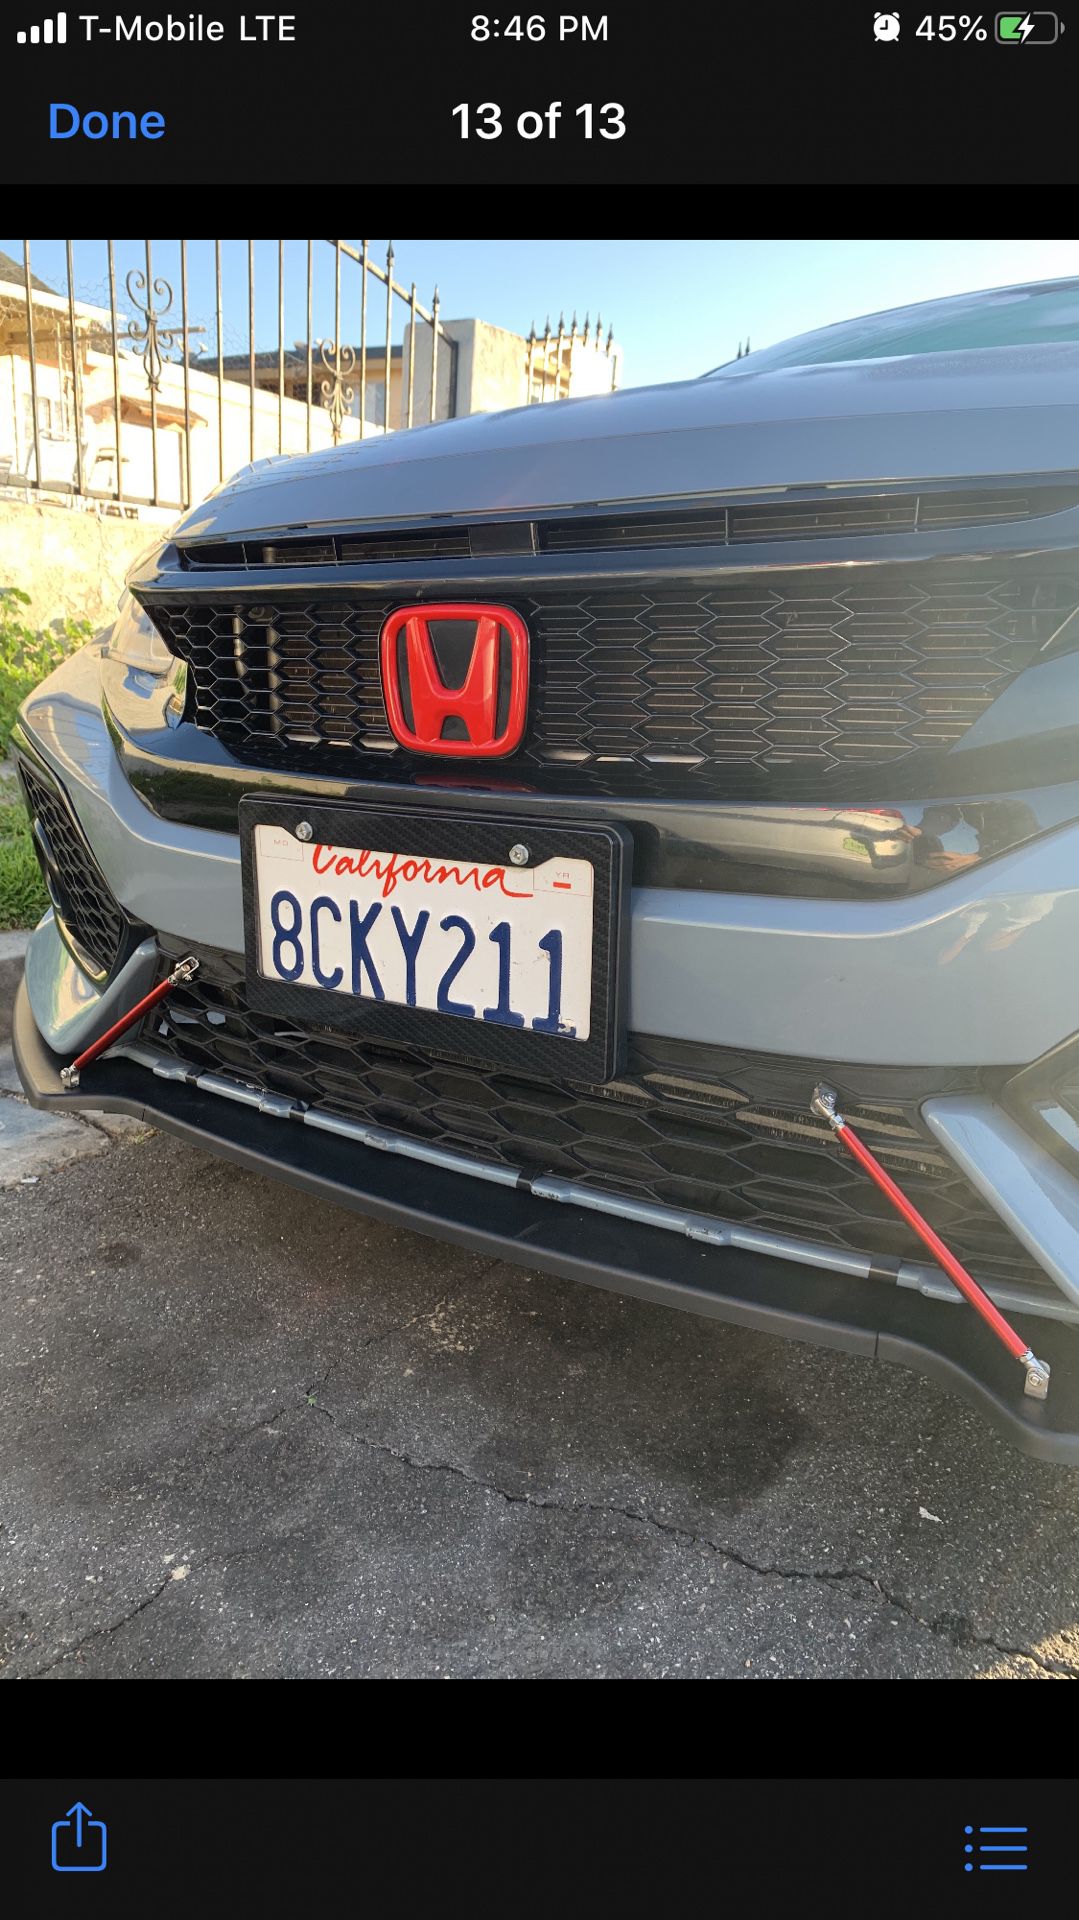 New license plate carbon fiber